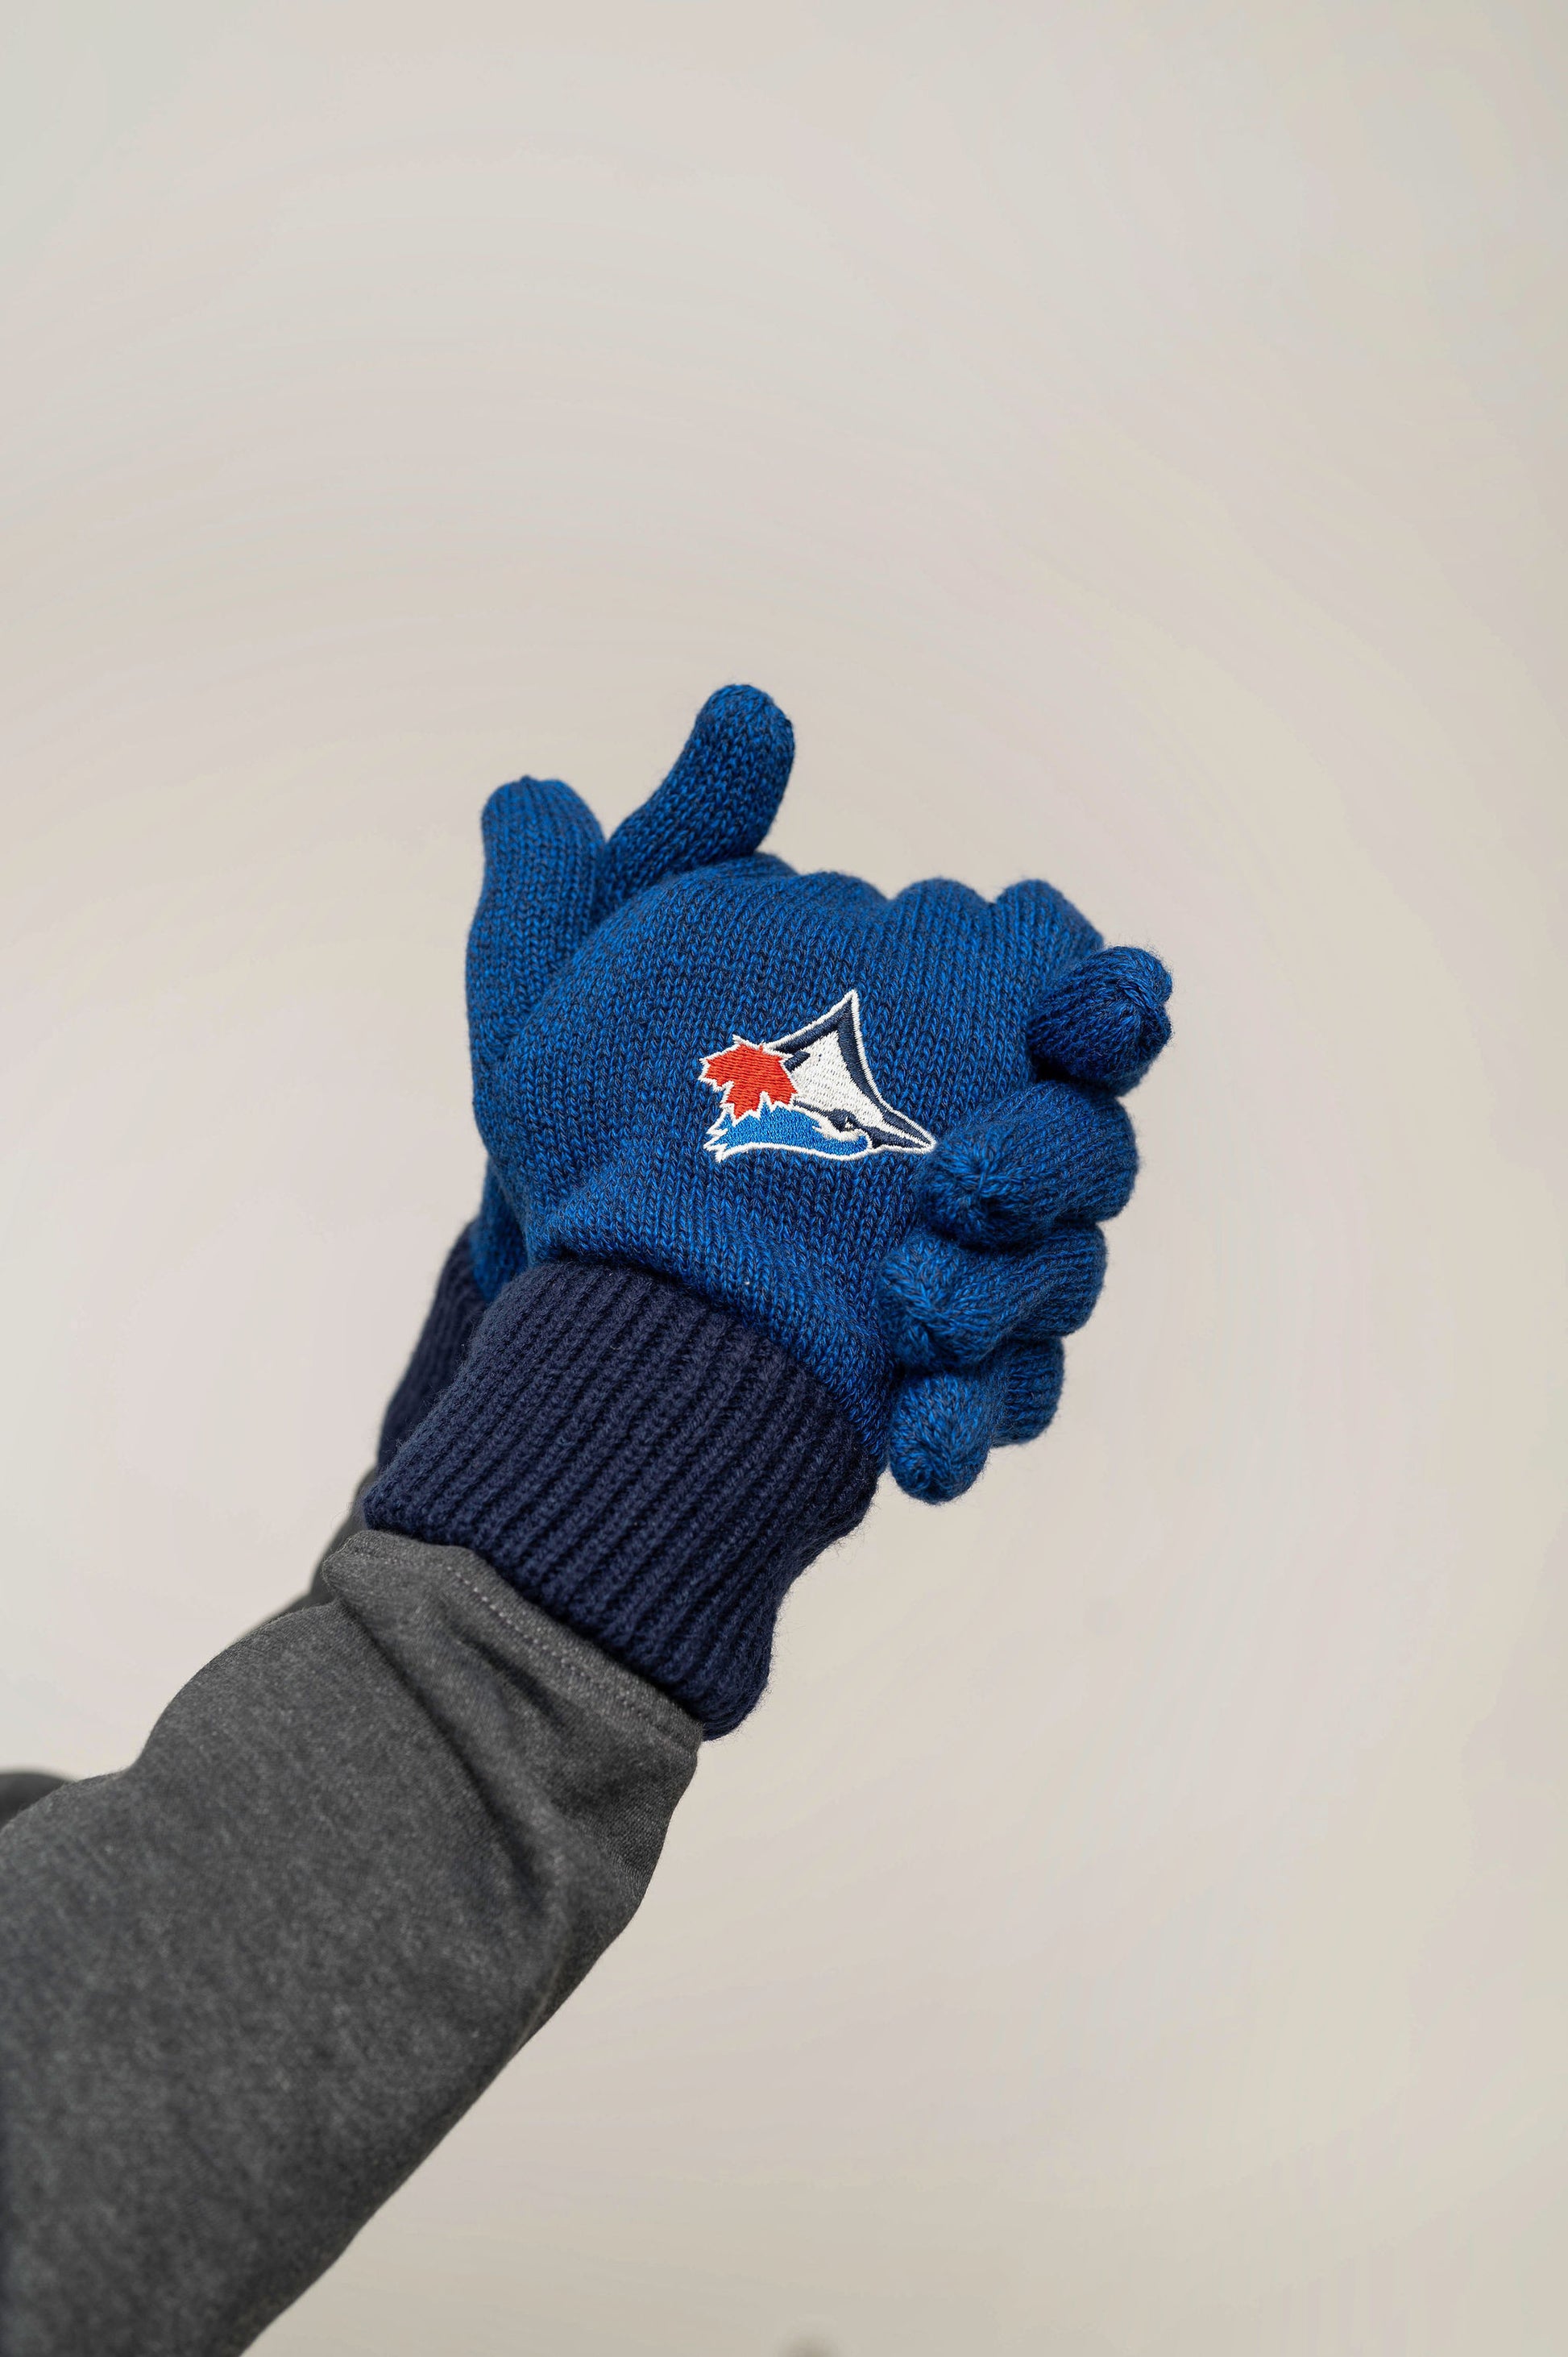 Gertex MLB Toronto Blue Jays Adult Men's Thermal Lined Gloves